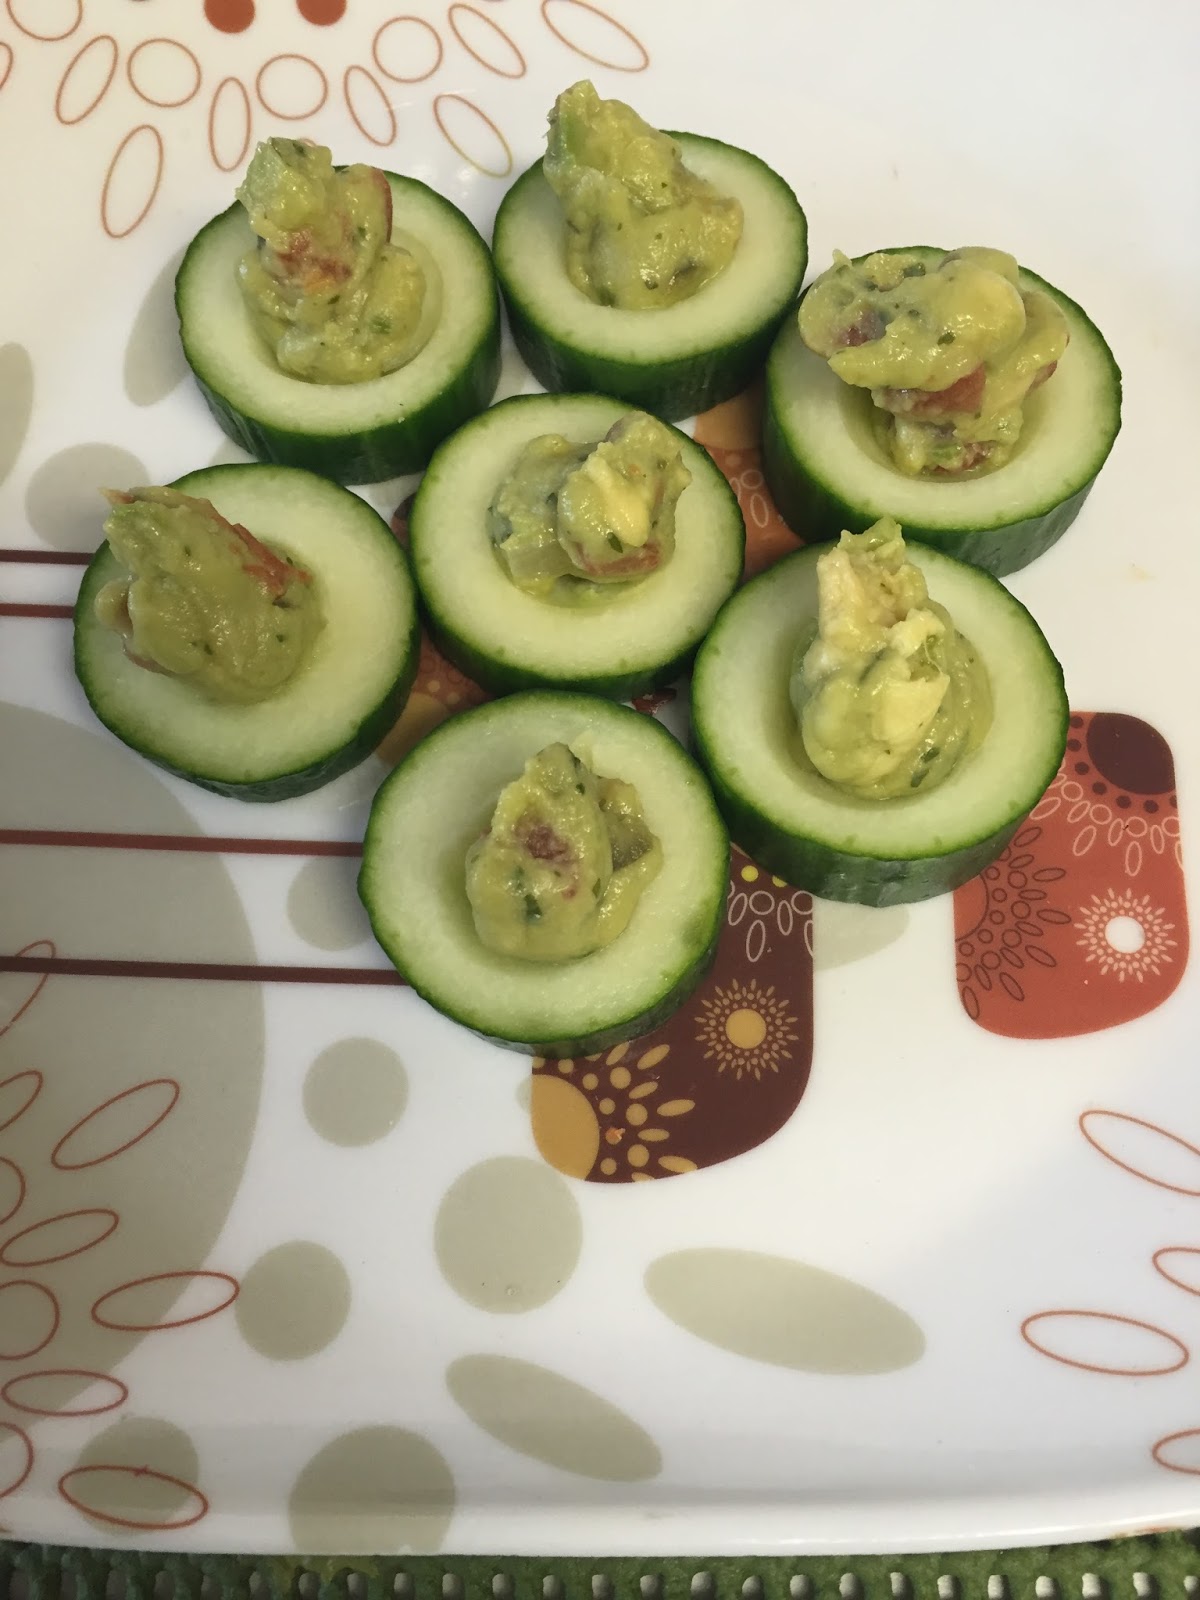 Queen of my kitchen: Cucumber snacks